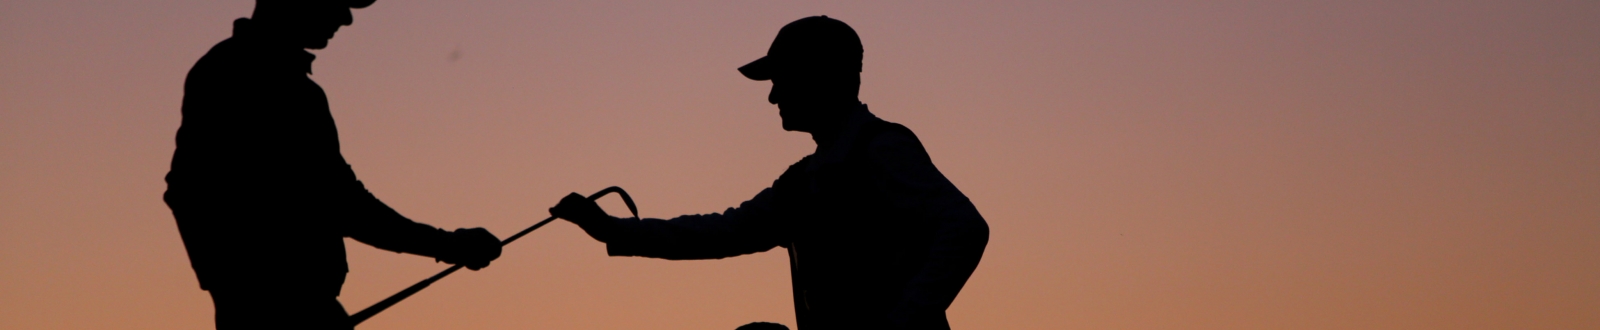 Caddie handing a golfer a club at dusk